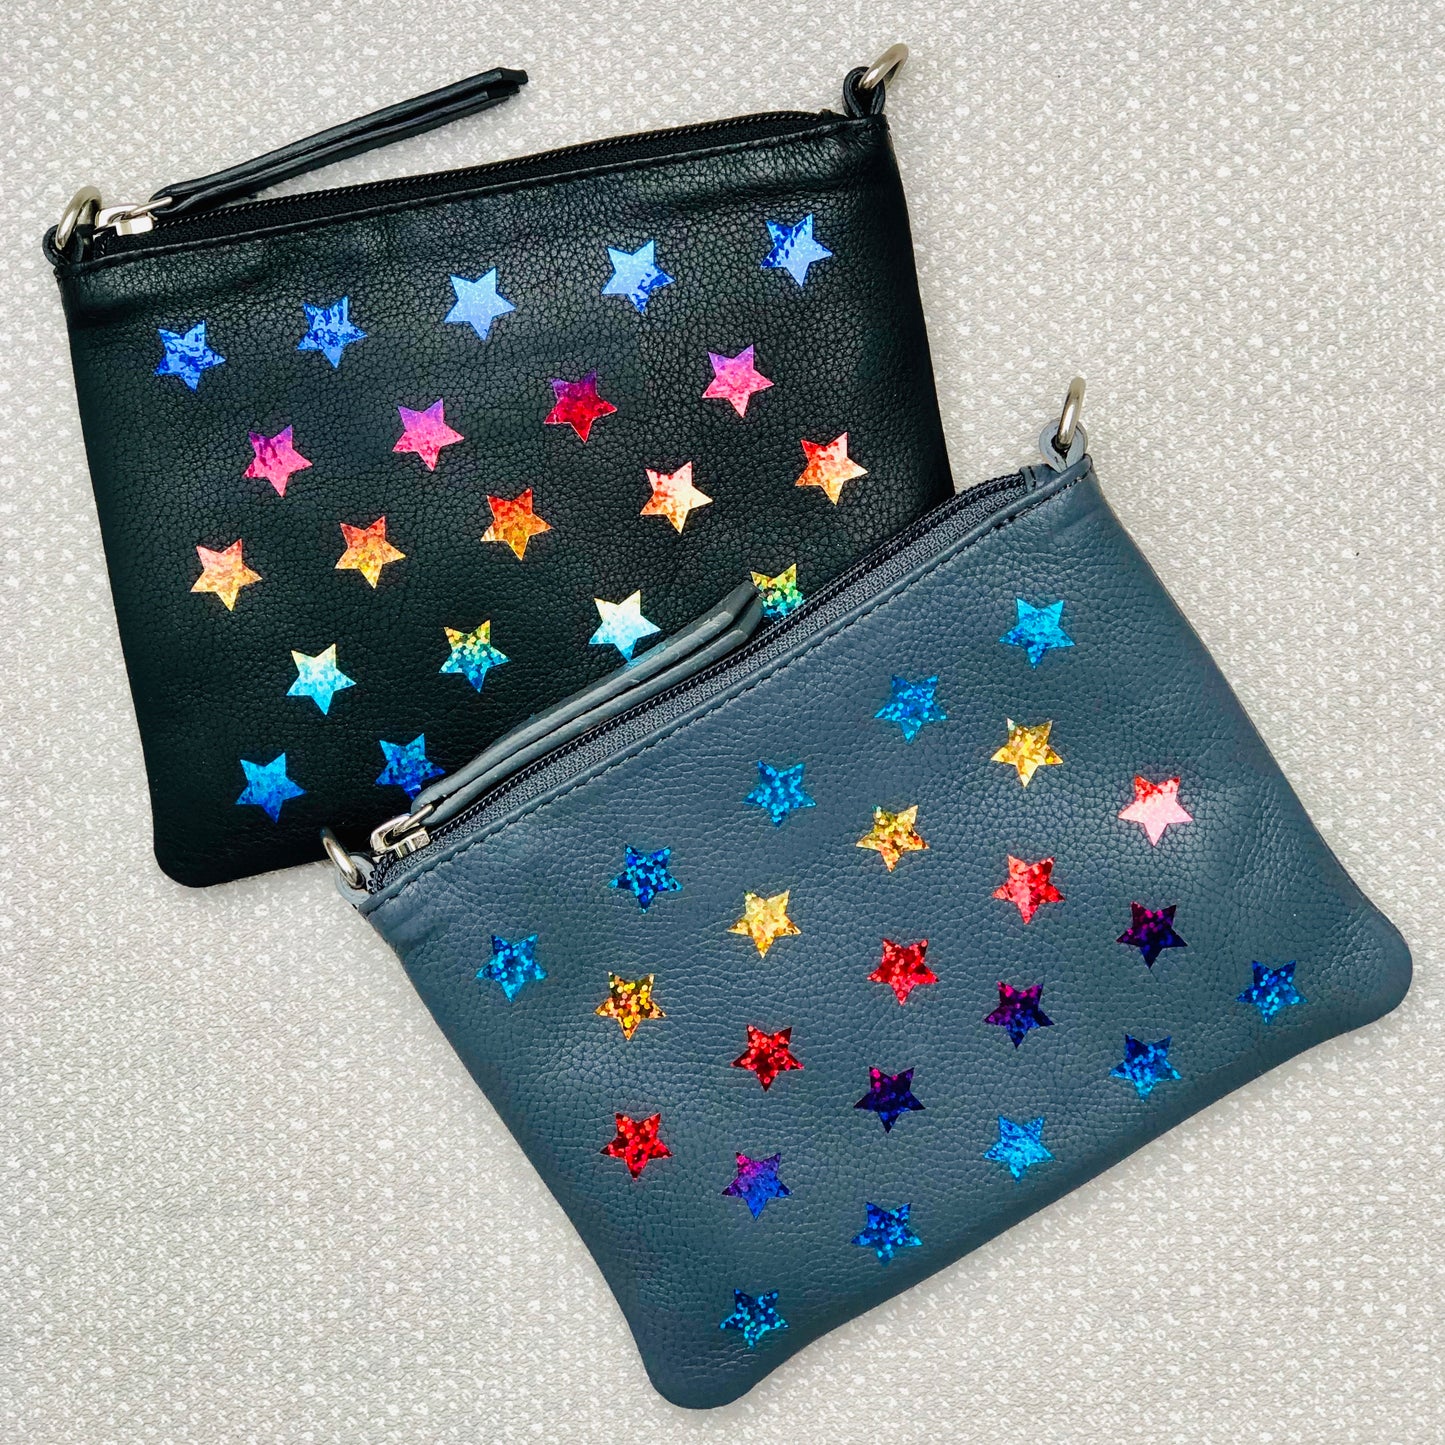 Rainbow Stars Leather Small Shoulder Clutch Bag LBR202-Grey